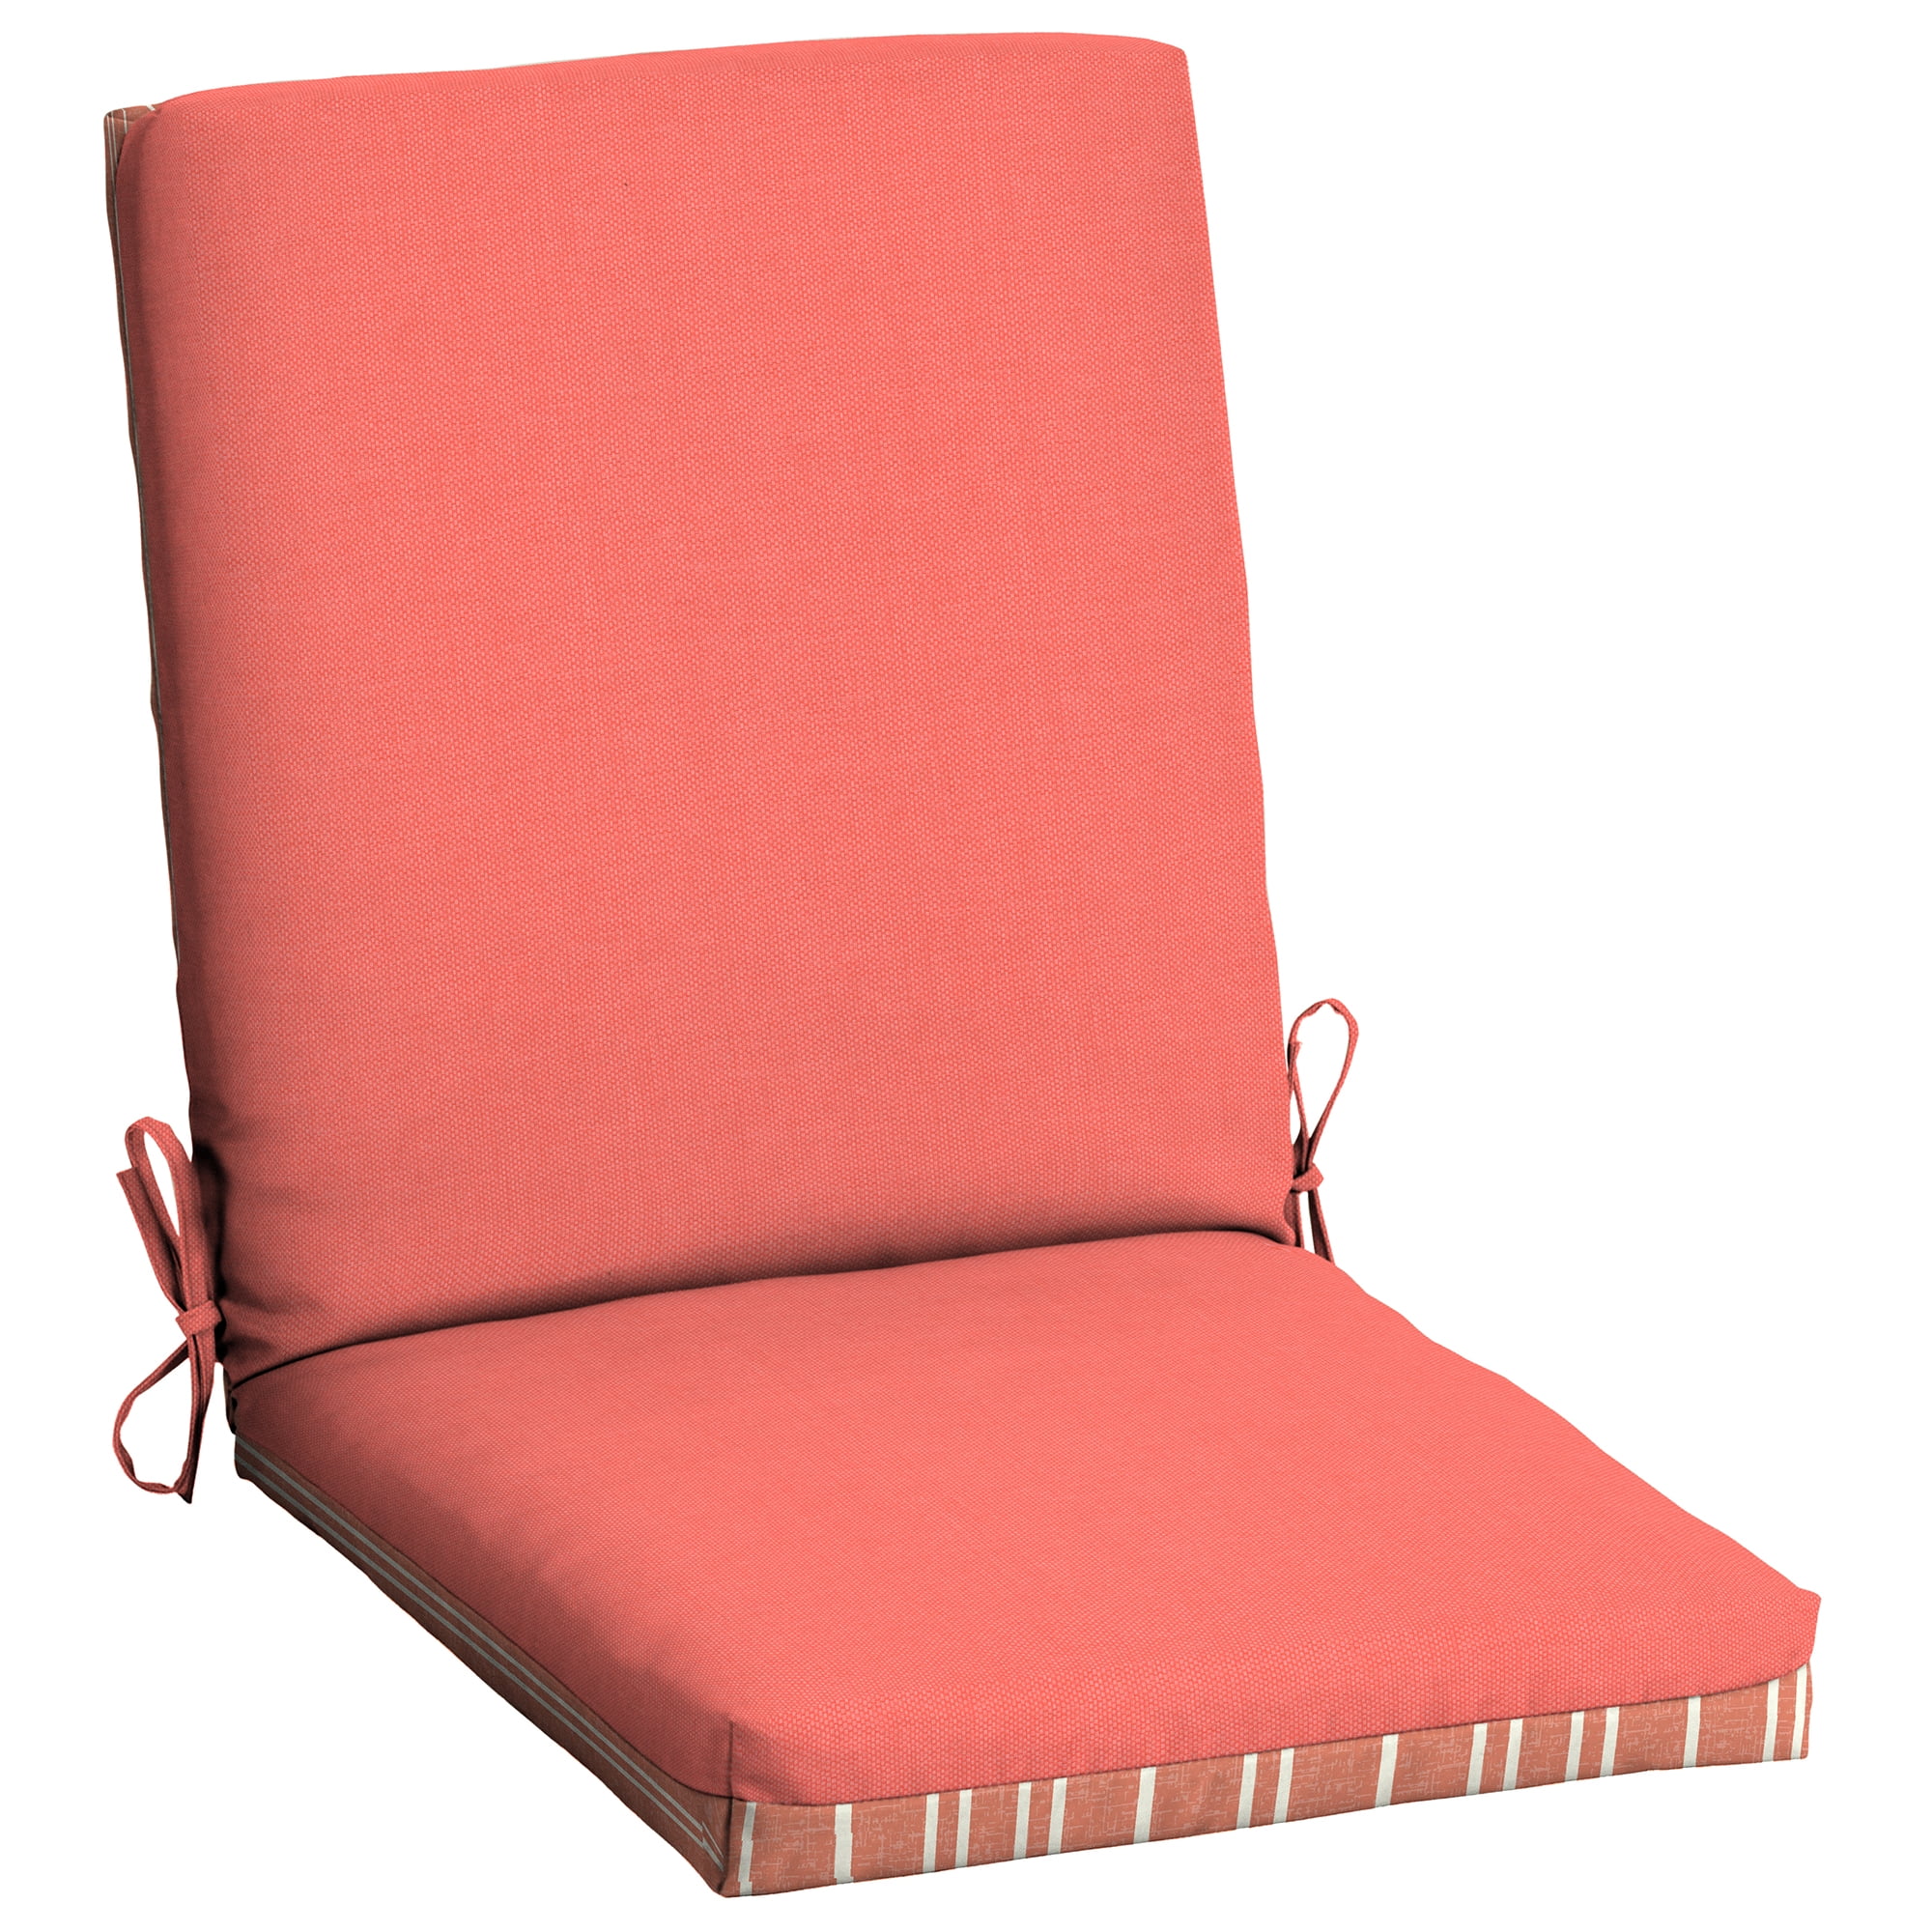 Mainstays 43 x 20 Solid Tan Rectangle Patio Chair Cushion, 1